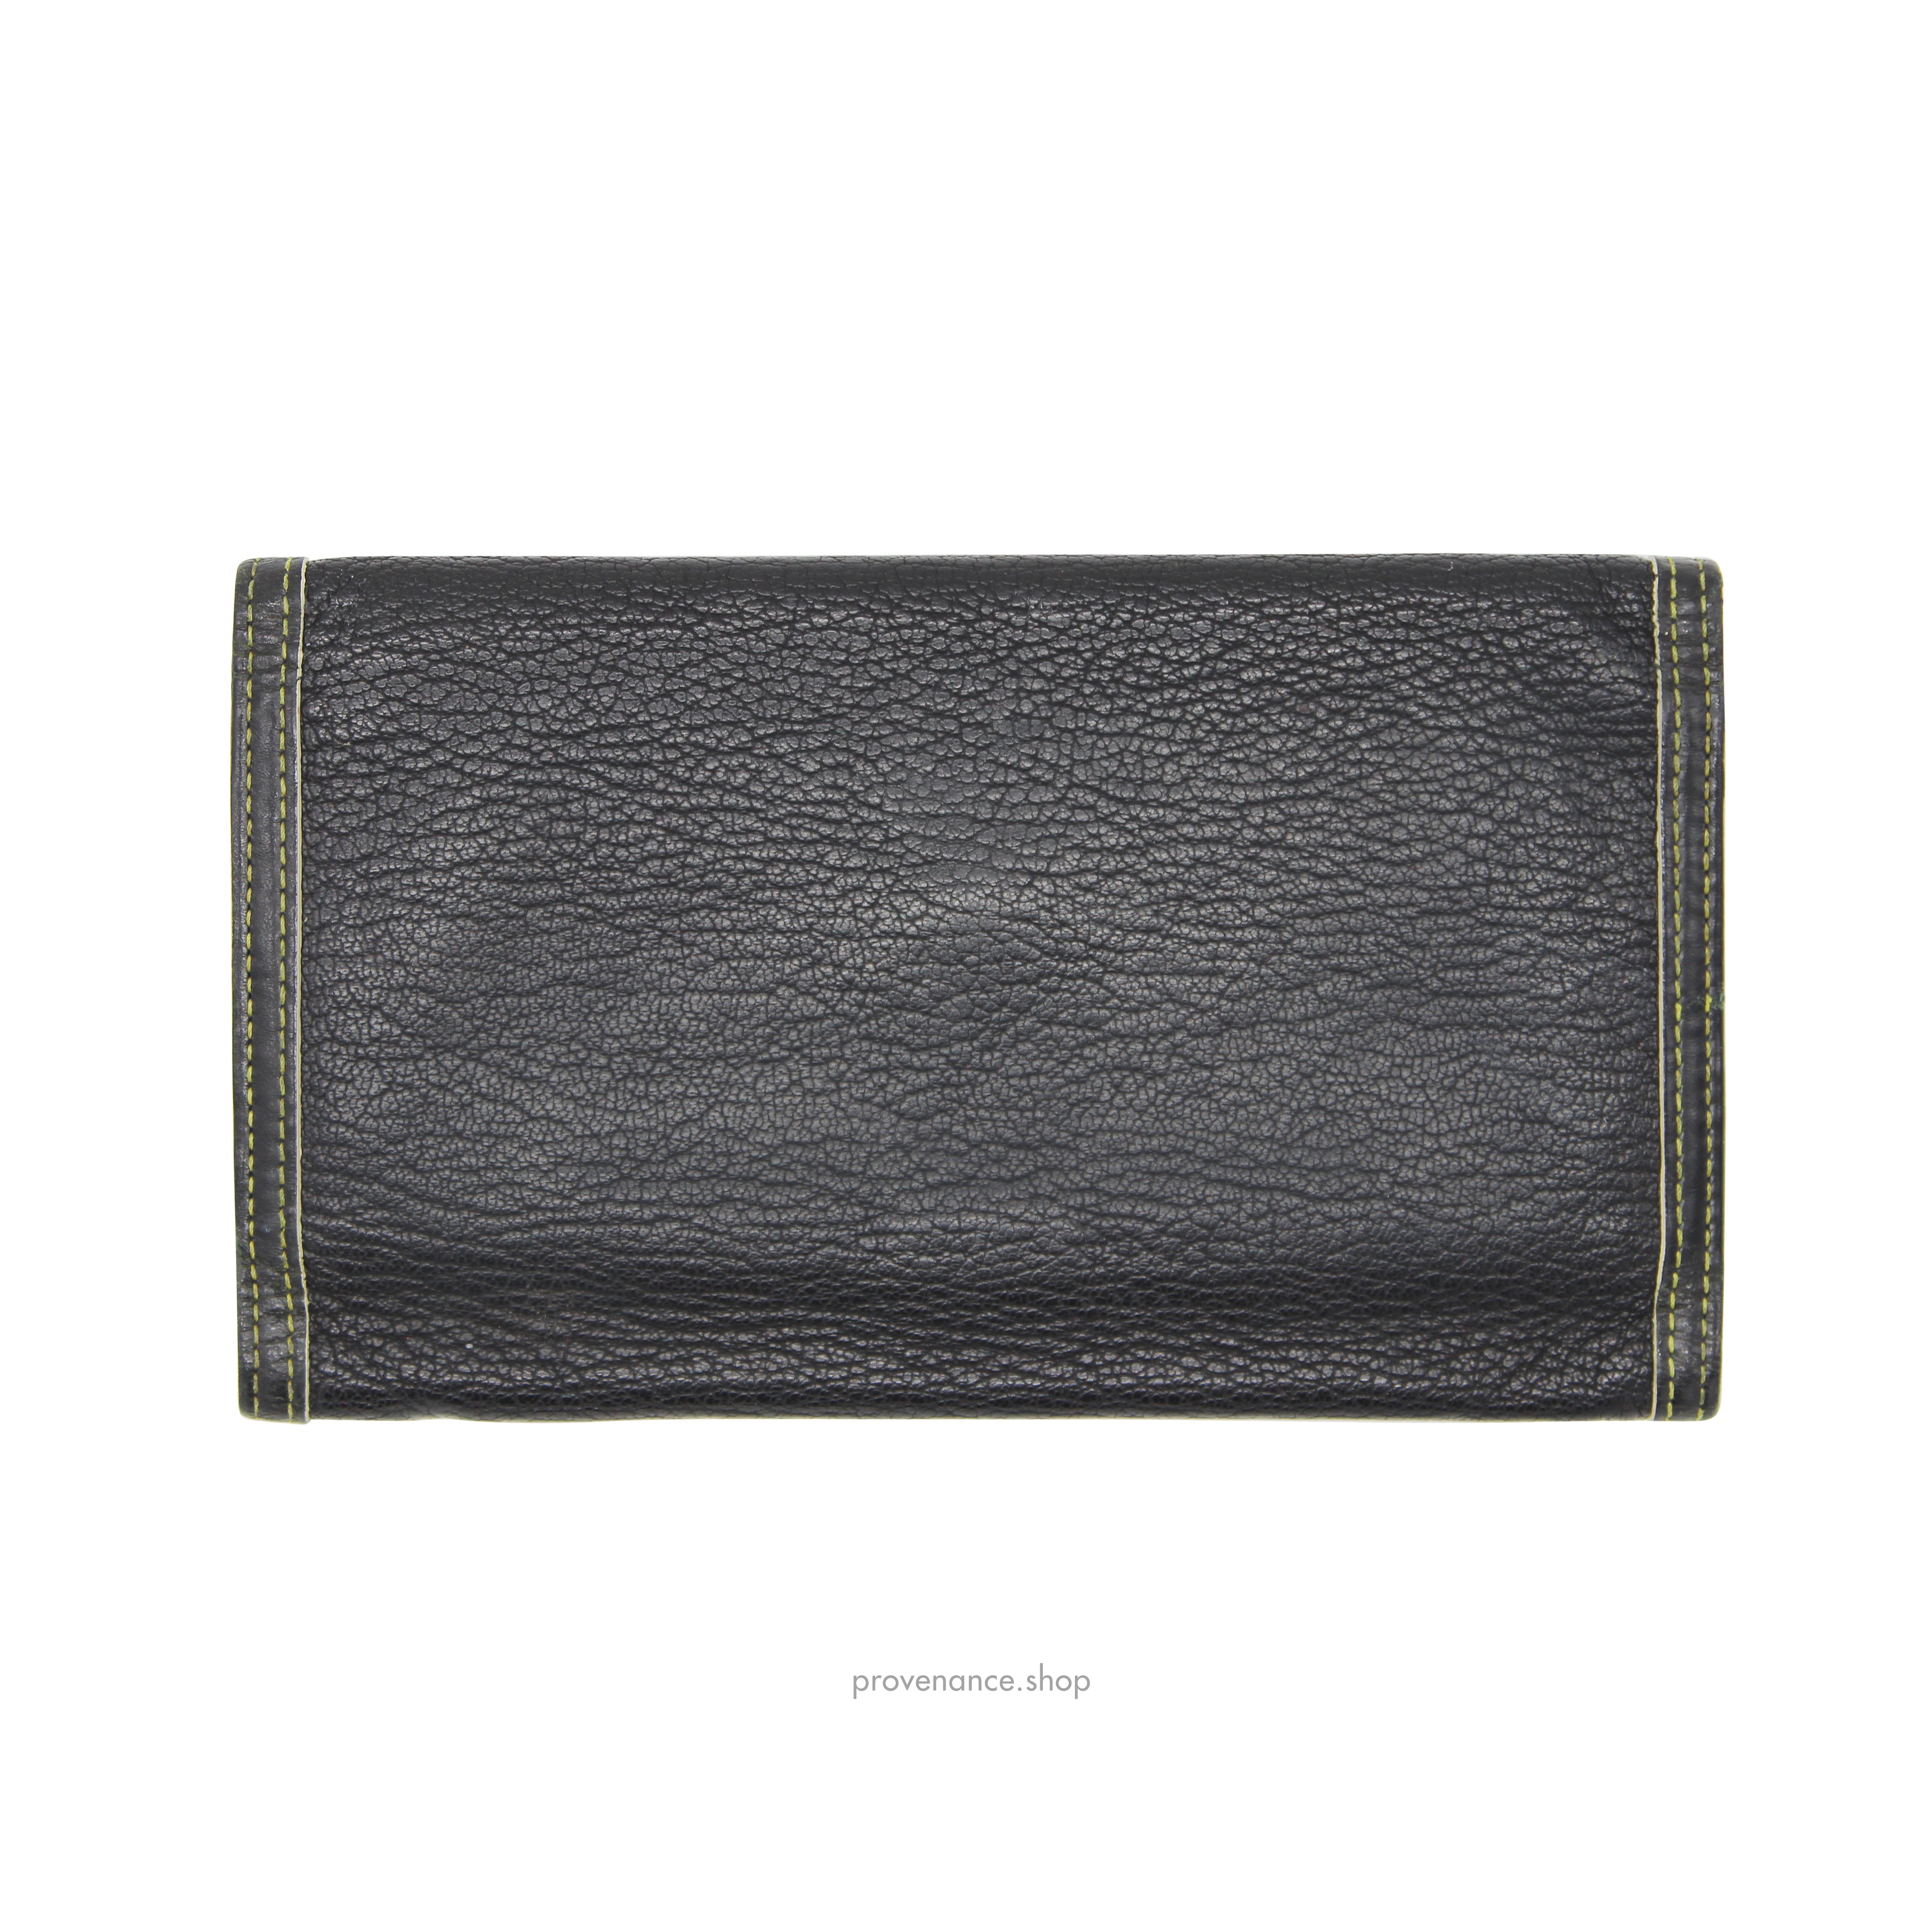 Louis Vuitton x Marc Jacobs International Wallet - White Suhali Leather